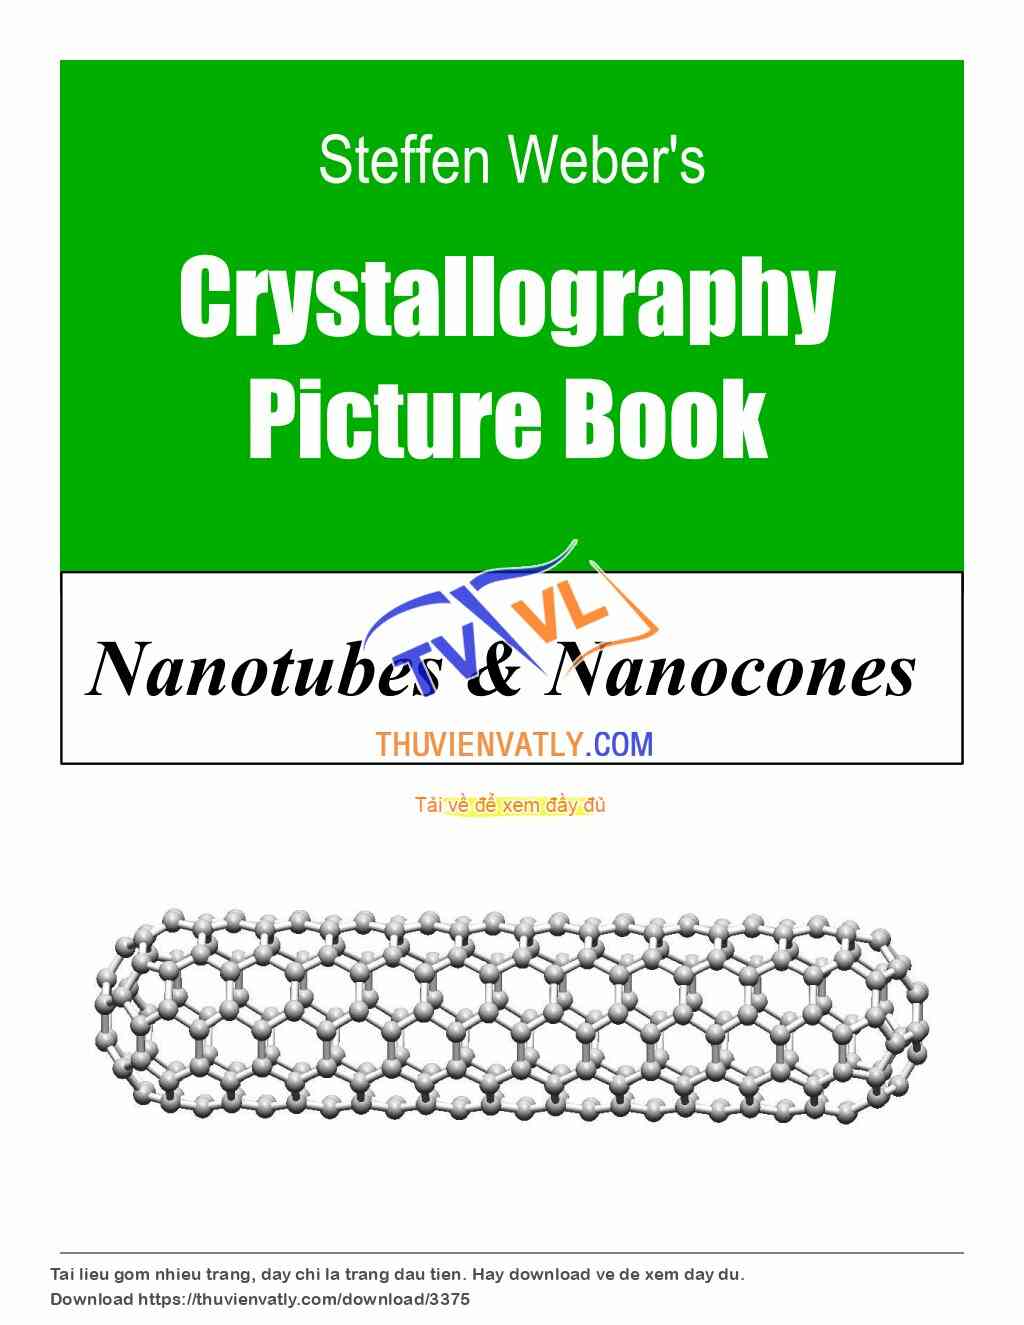 Nanotubes & Nanocones